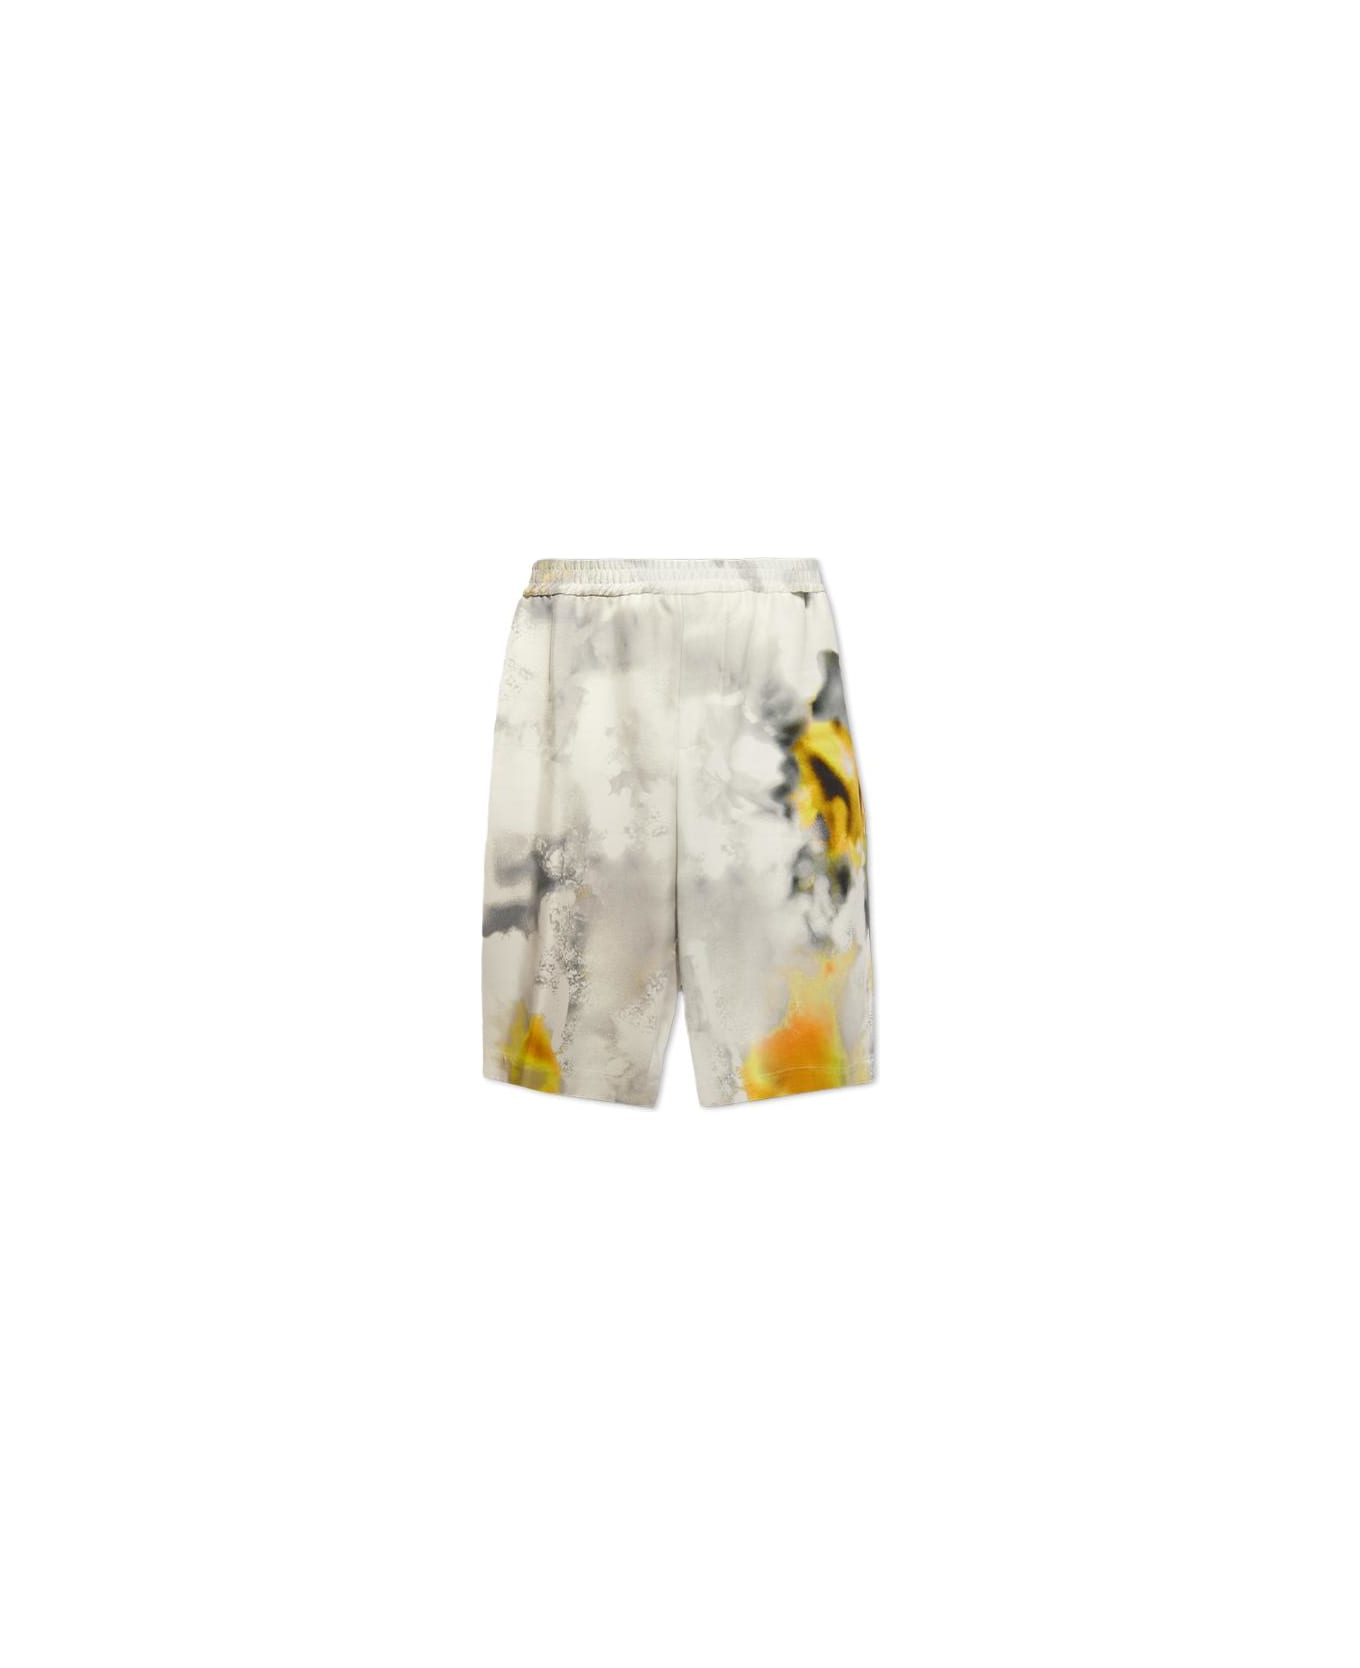 Alexander McQueen Obscured Flower Shorts - White